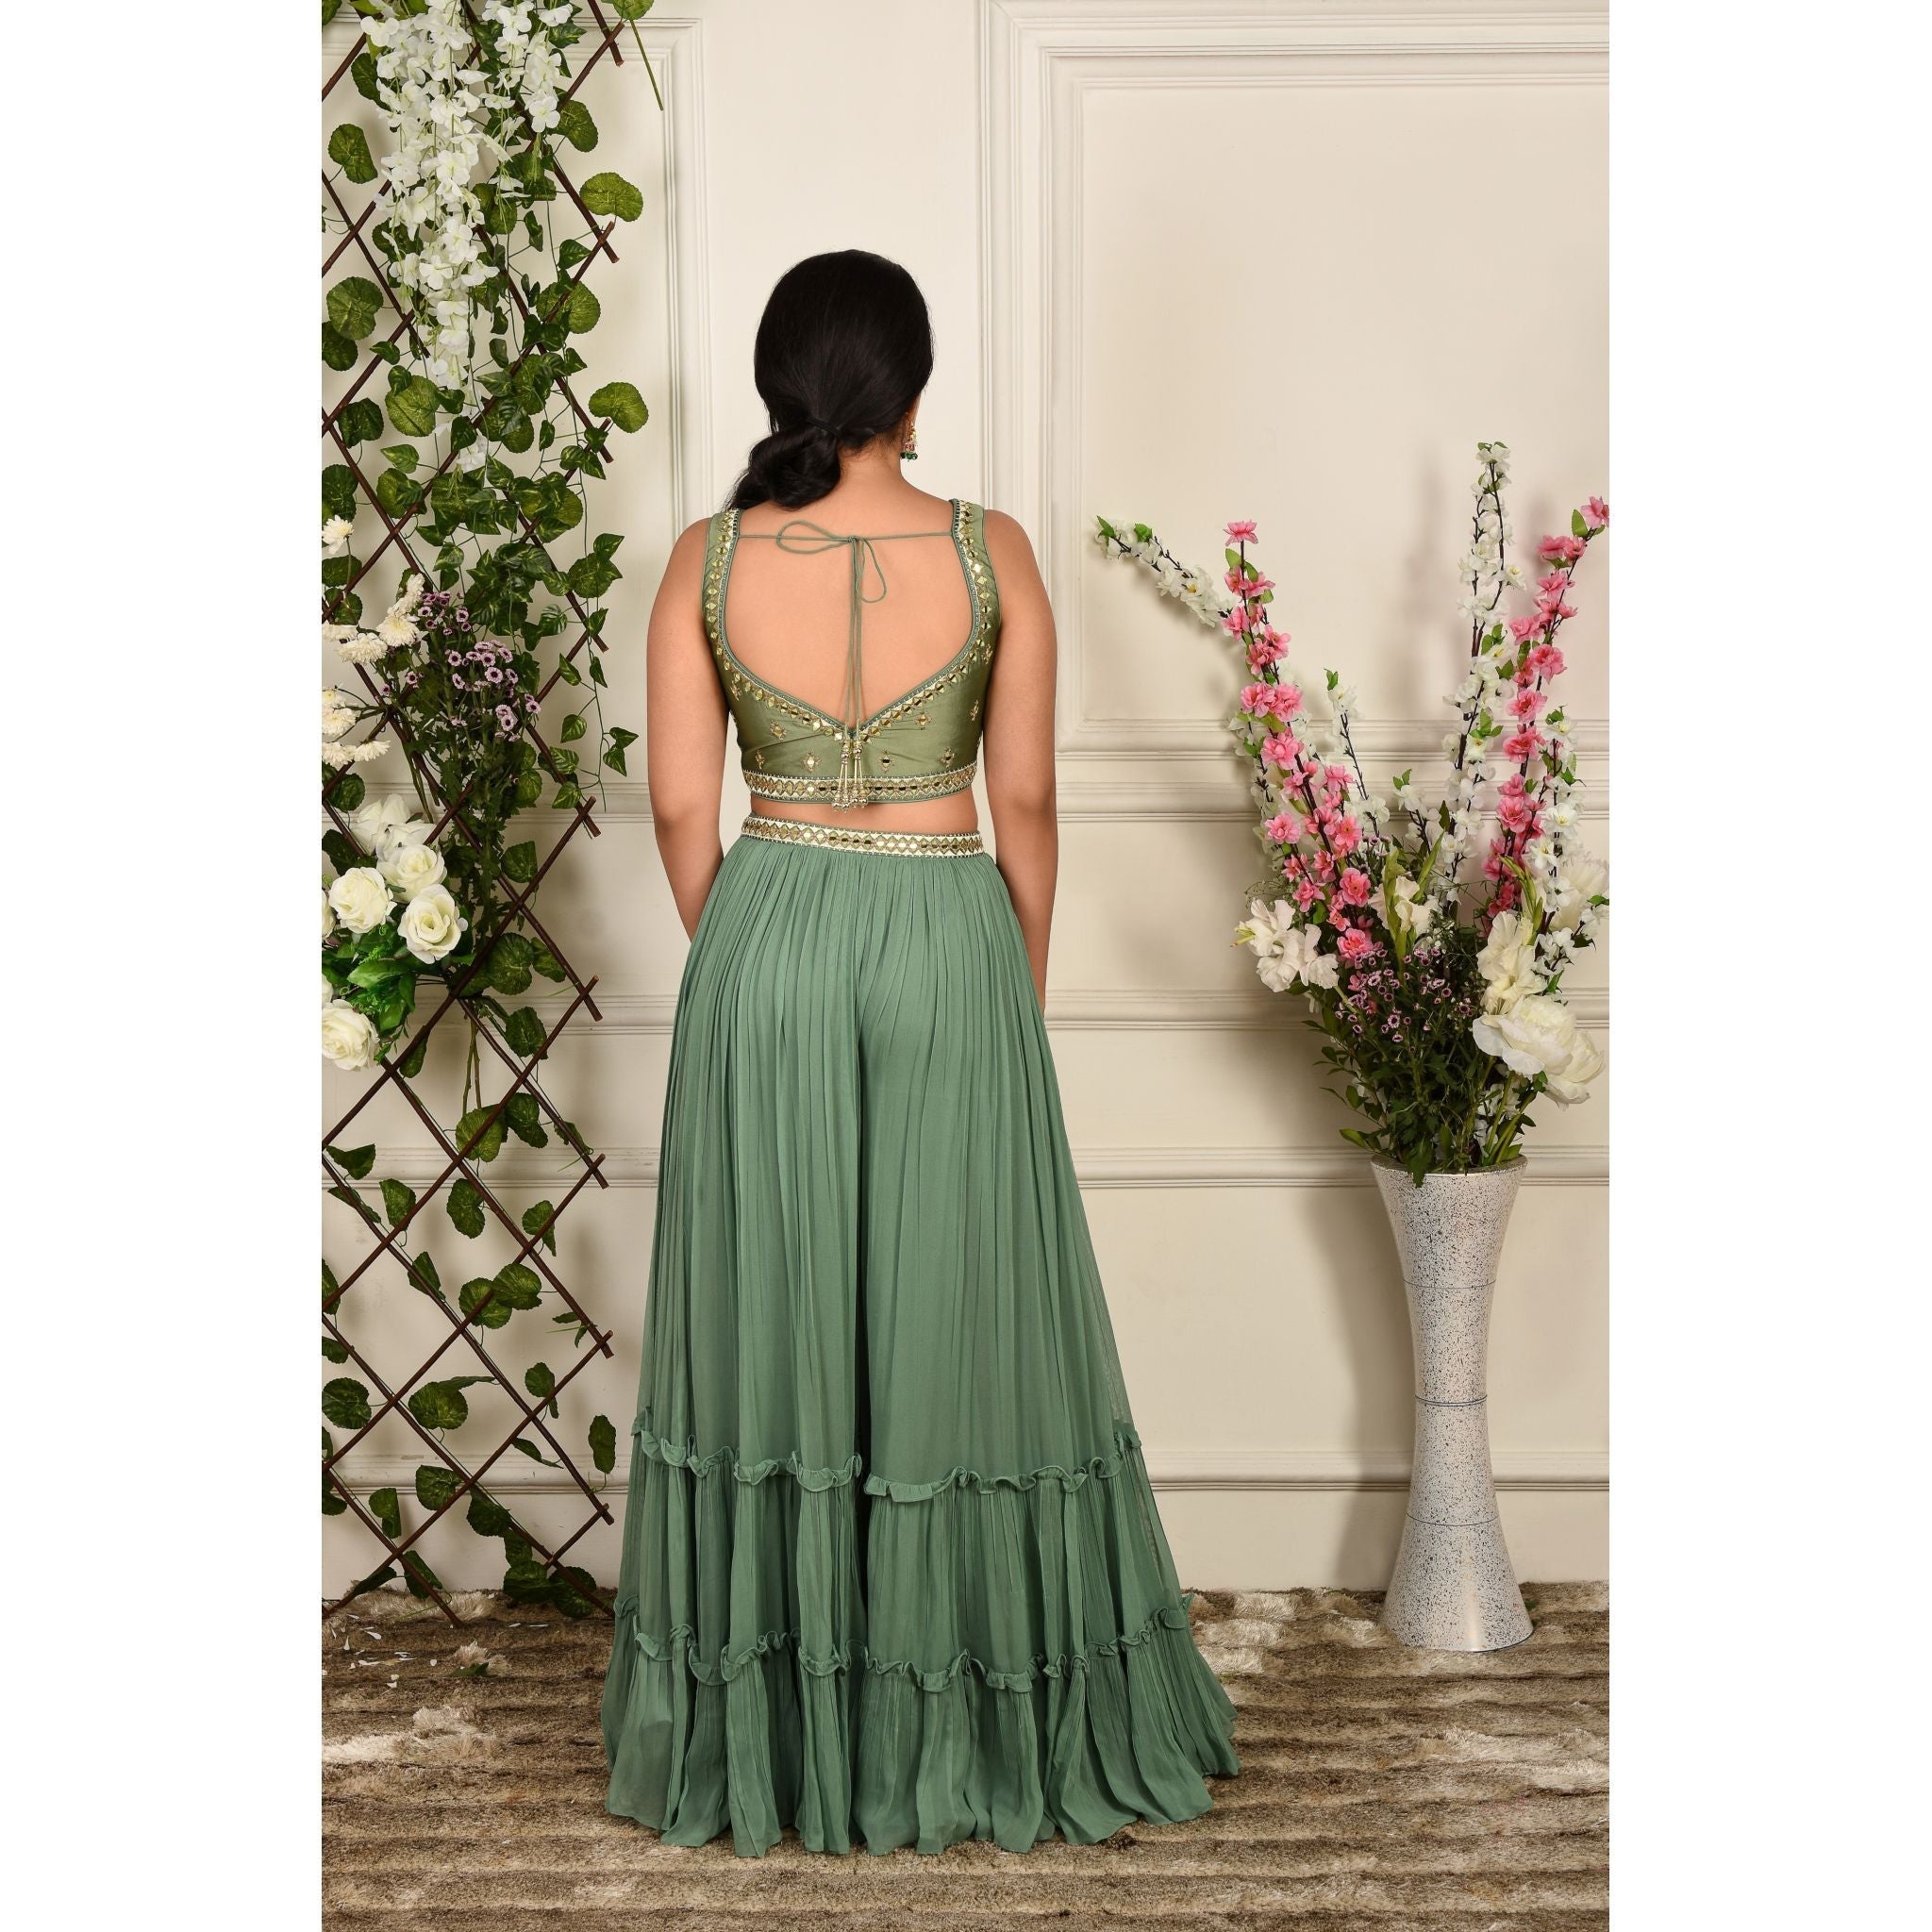 Sage Tiered Palazzo Jacket Set - Indian Designer Bridal Wedding Outfit